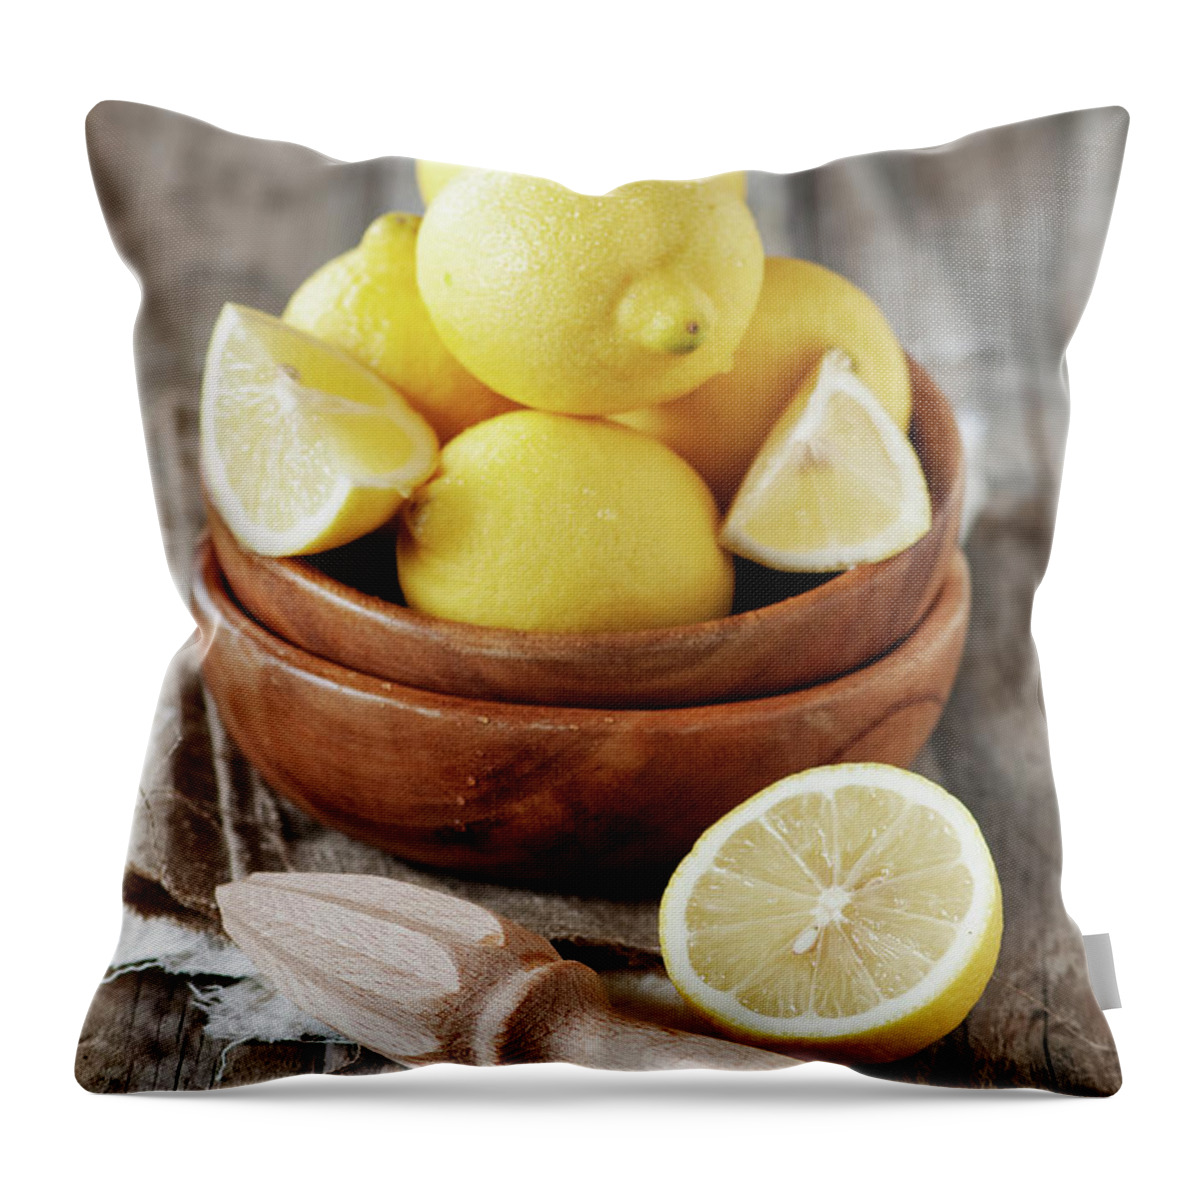 Napkin Throw Pillow featuring the photograph Fresh Lemons by Oxana Denezhkina